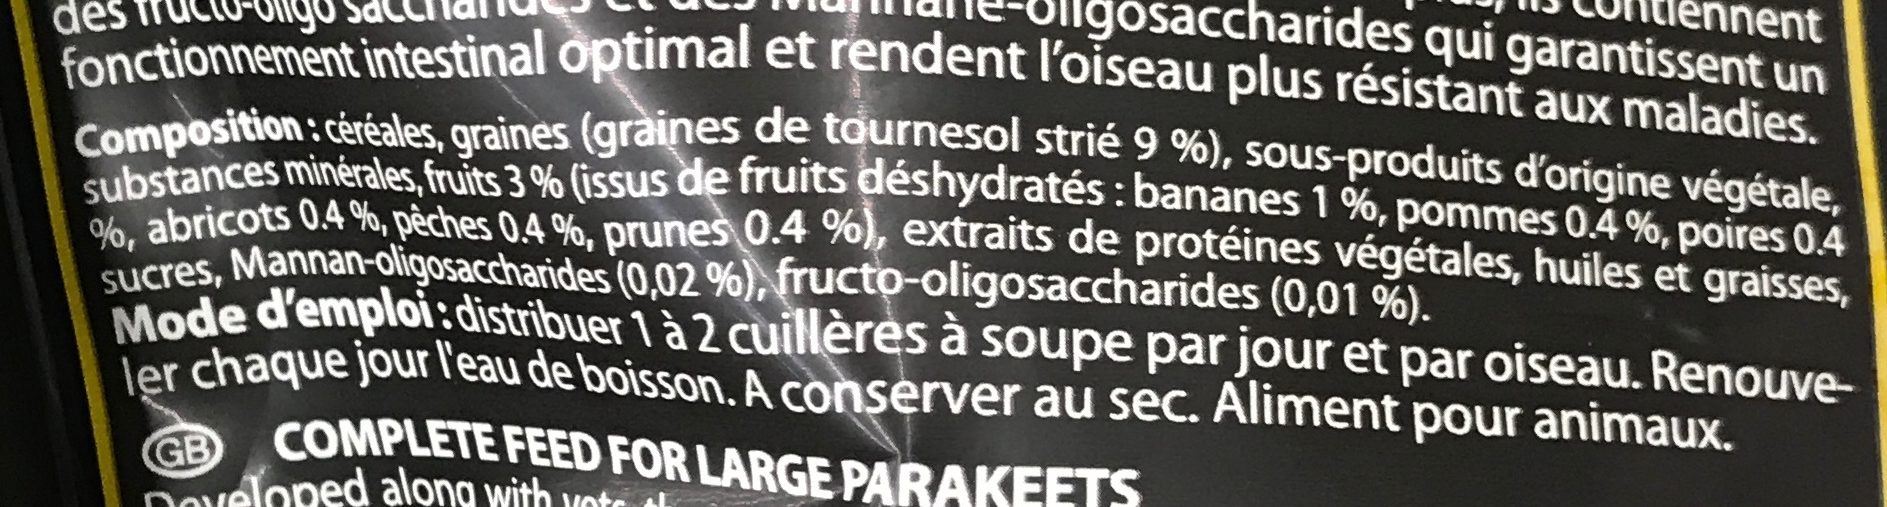 Menu Premium aux fruits Grandes Perruches - Ingredients - fr